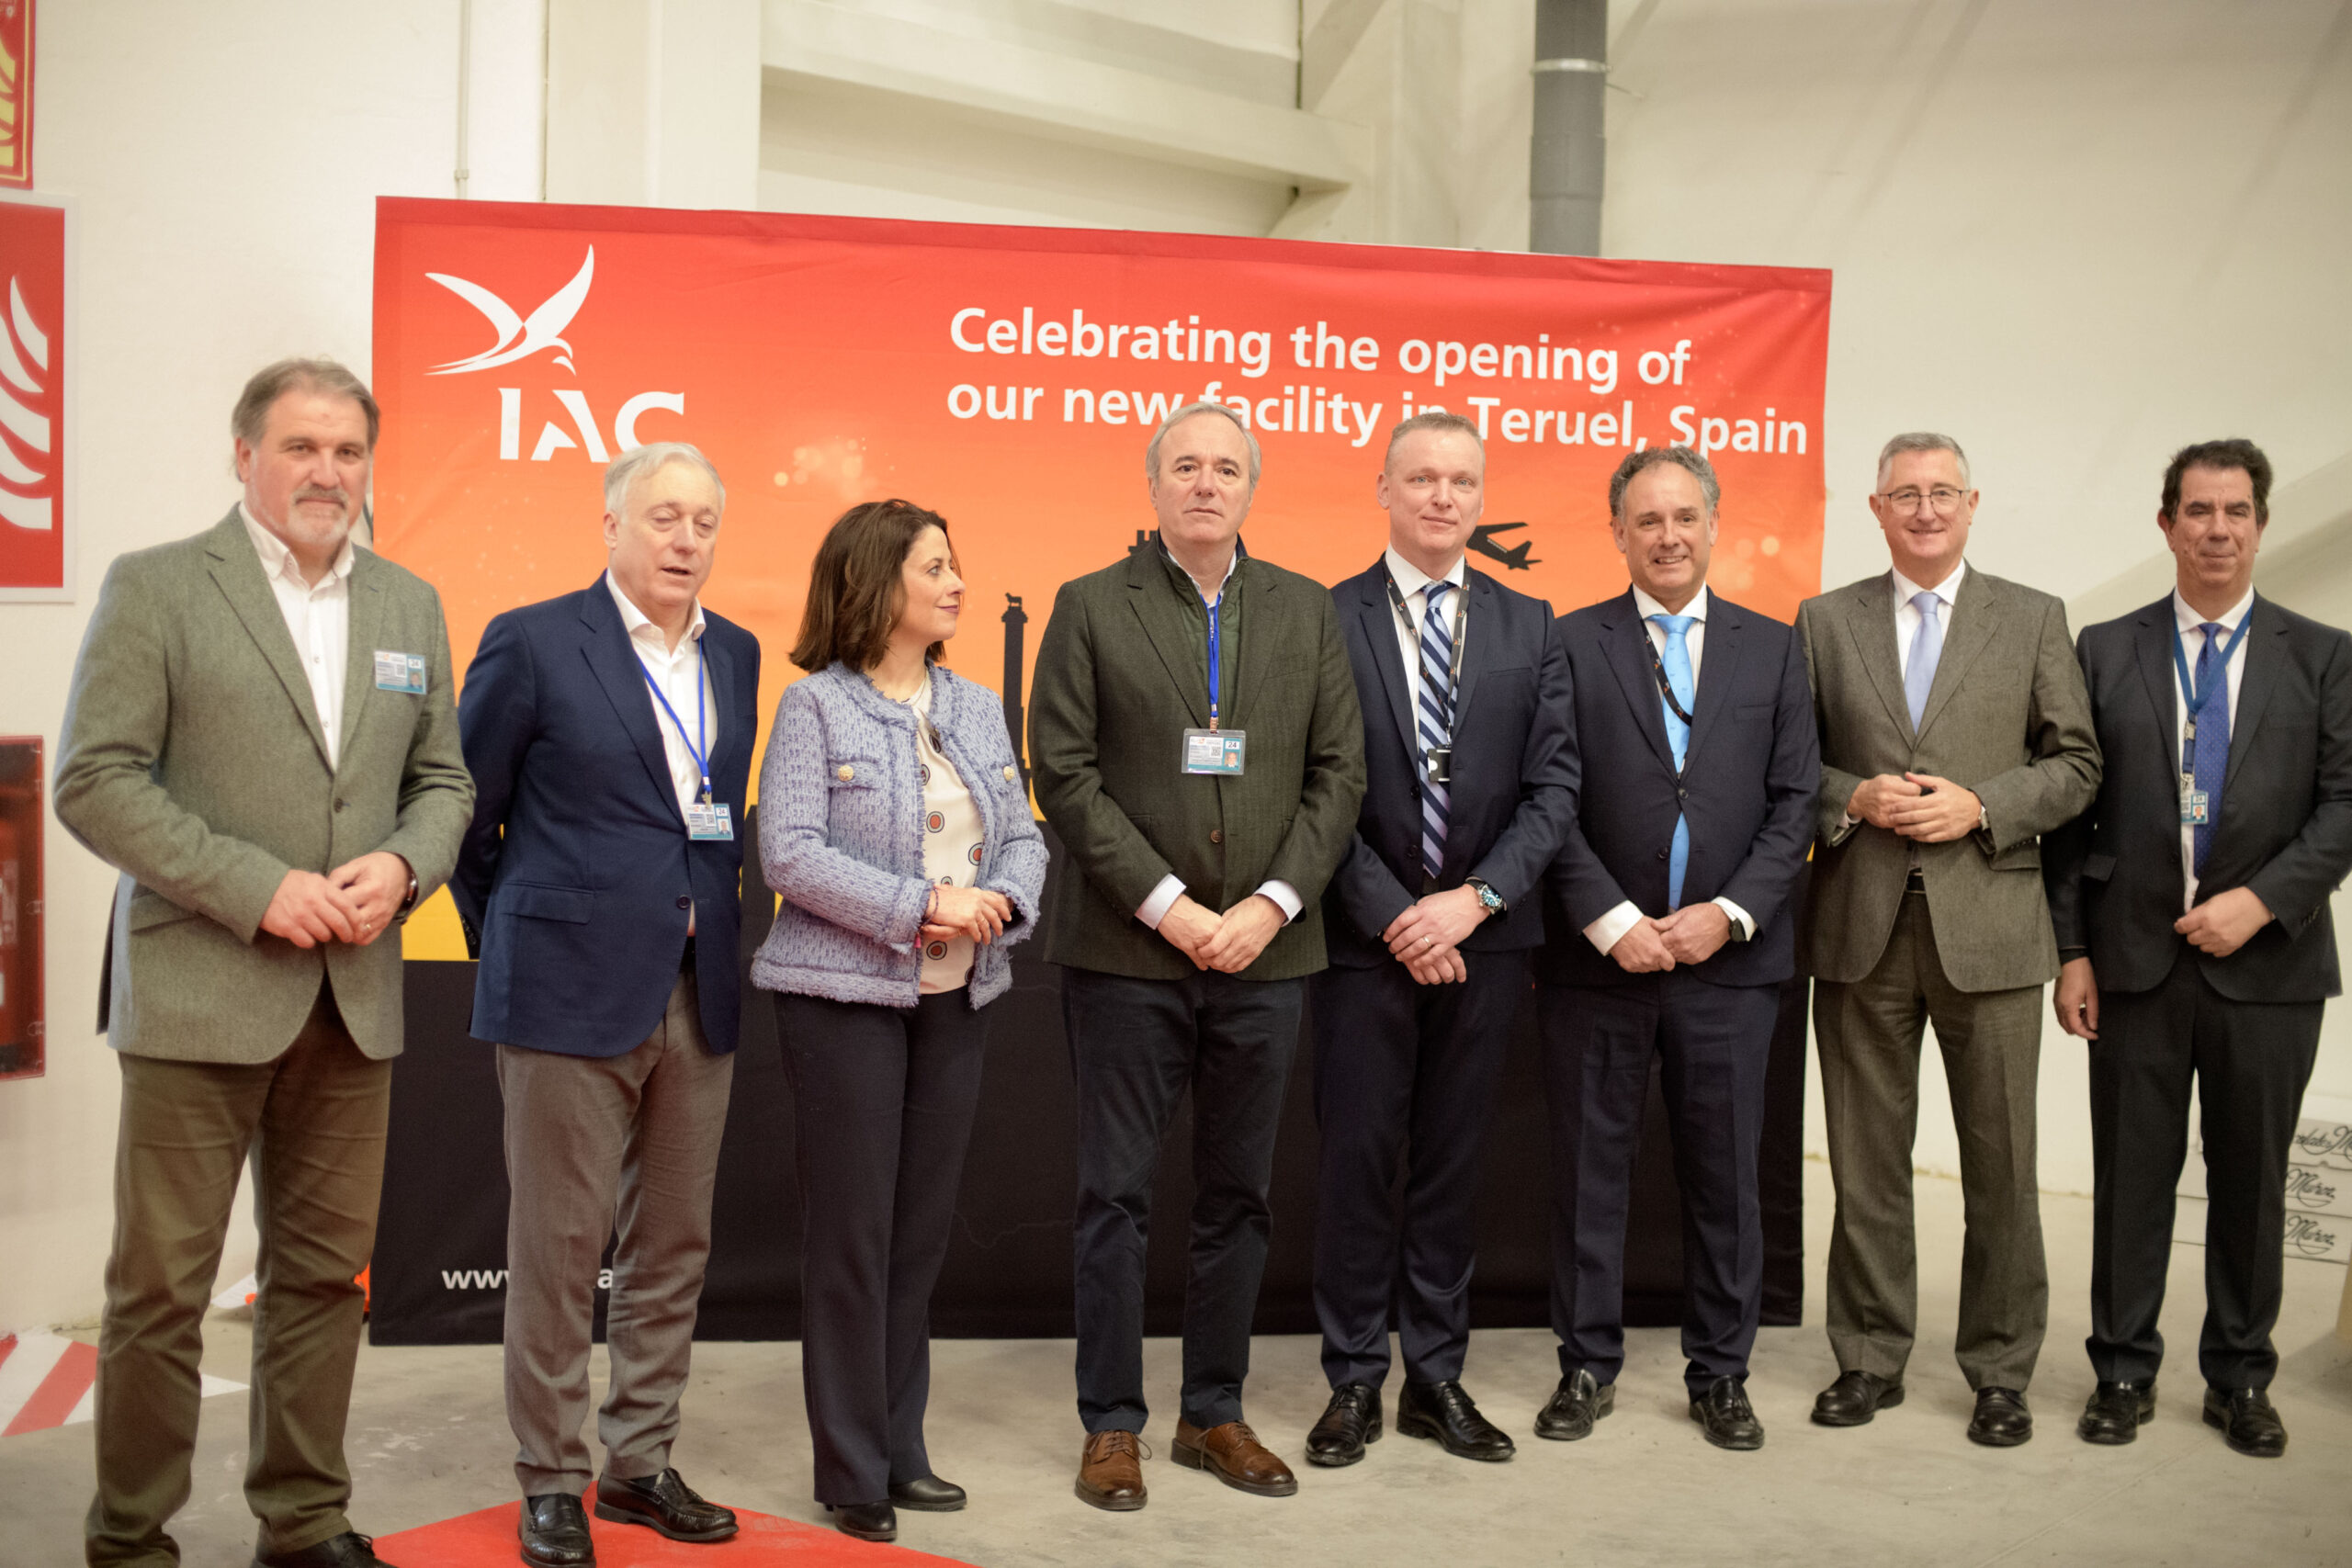 IAC celebrates the inauguration of their newest facility in Teruel,Spain 1